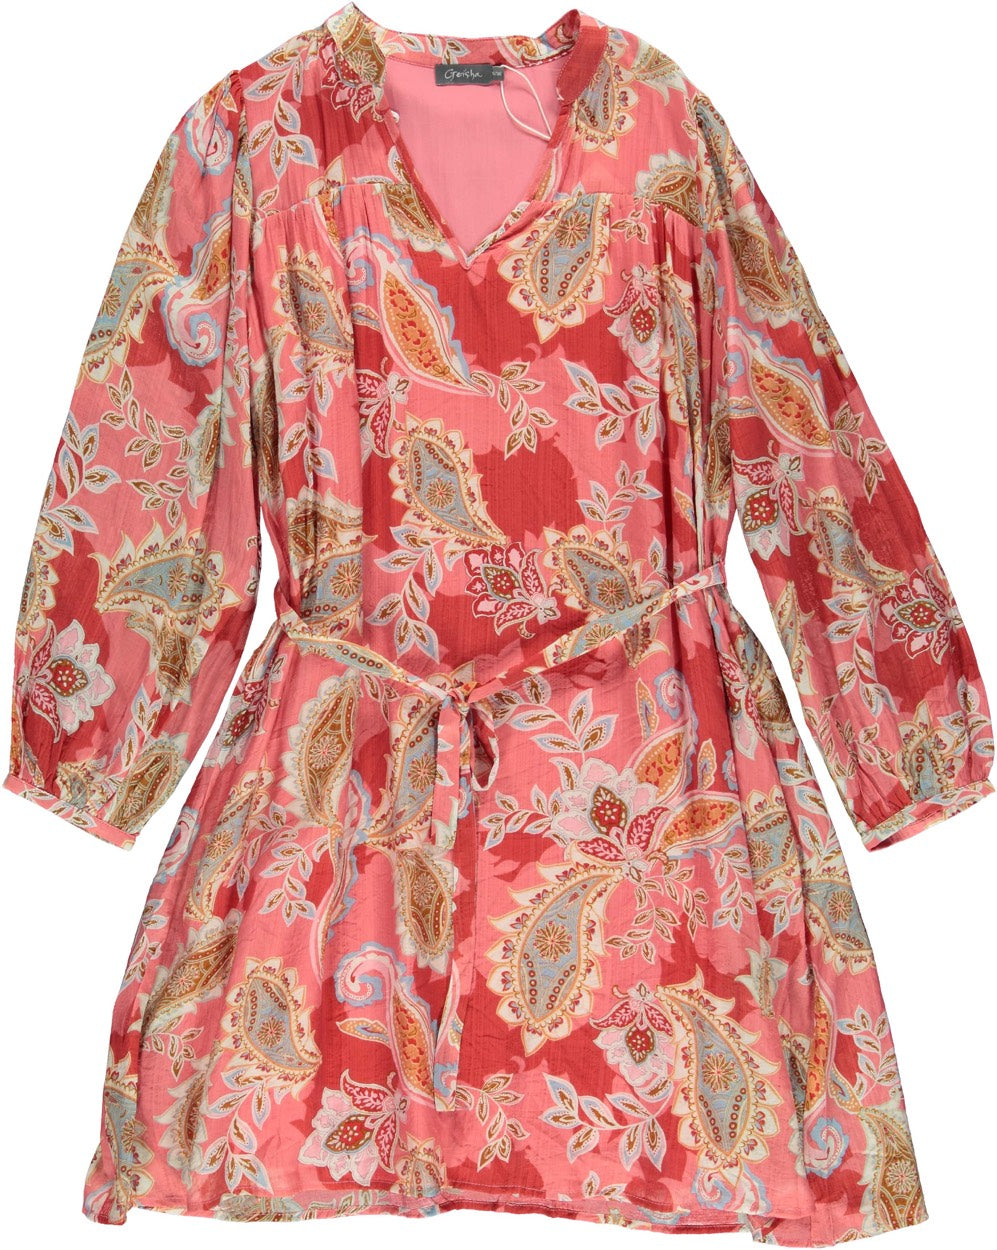 Dress Paisley - Roze Dessin